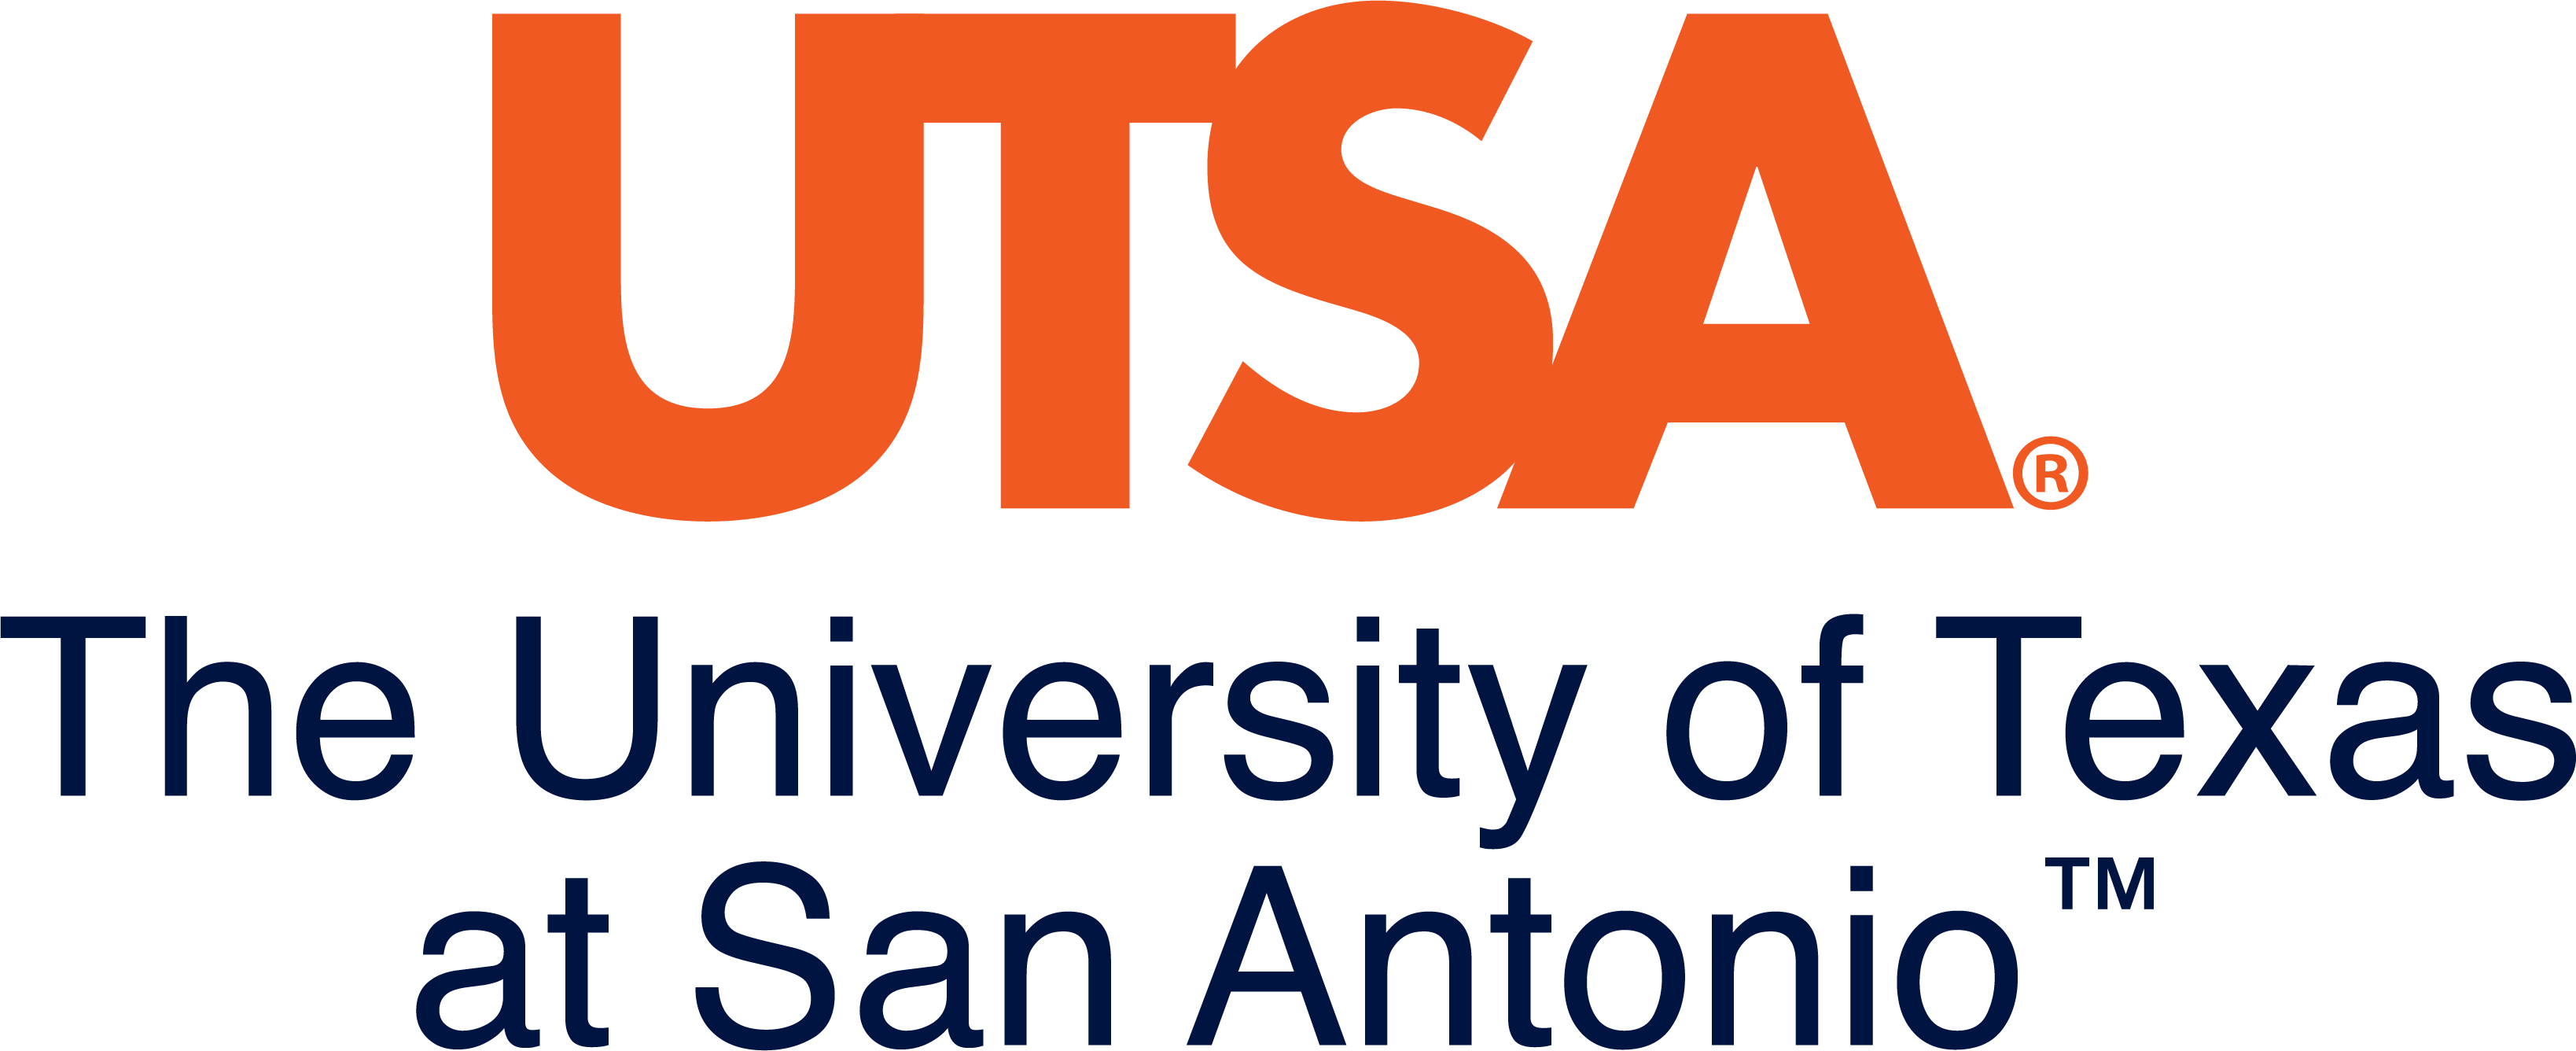 UTSA-logo-stacked_2-Color.png